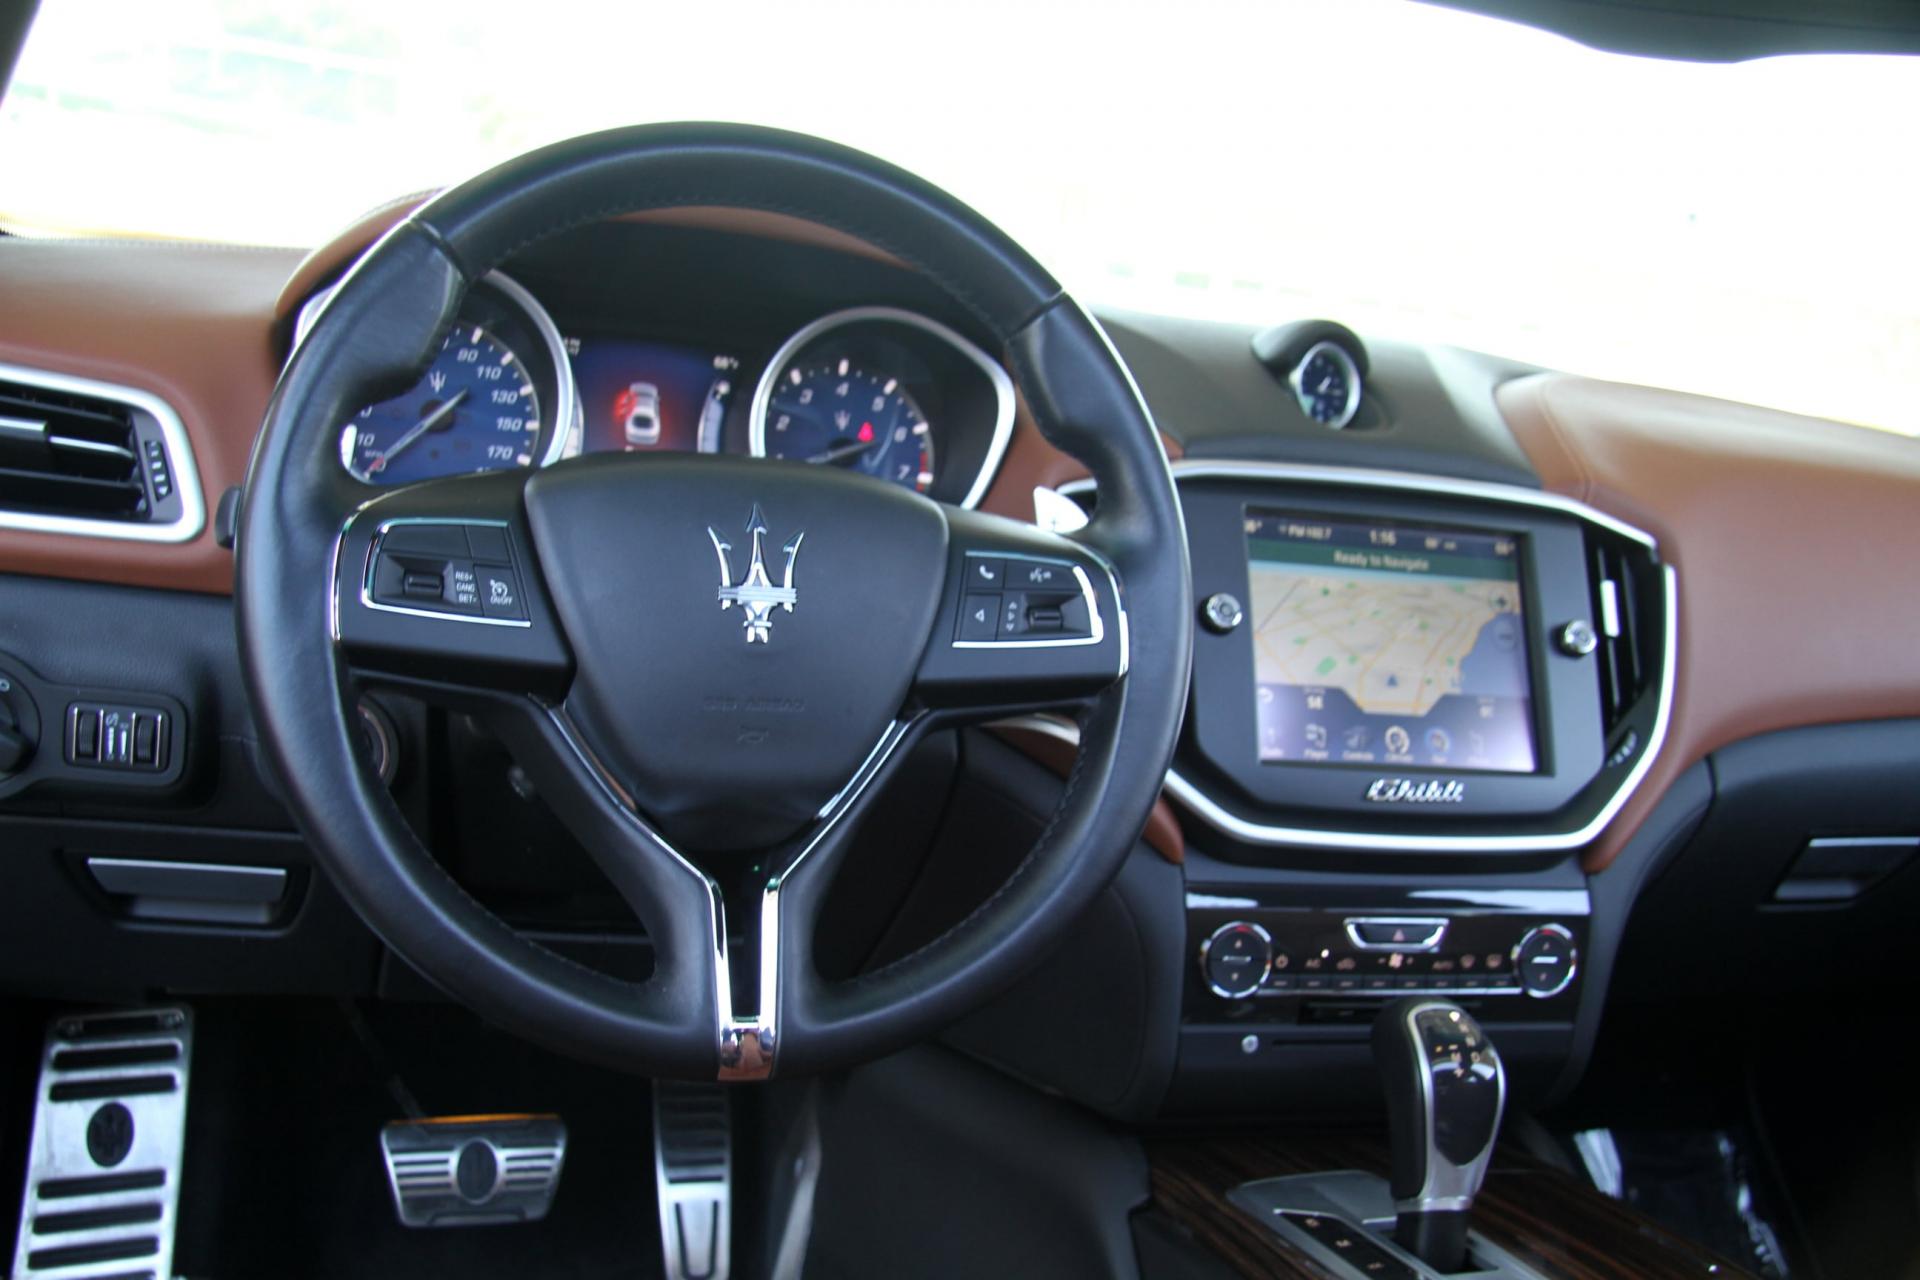 2015 Maserati Ghibli S Q4 Stock 6705a For Sale Near